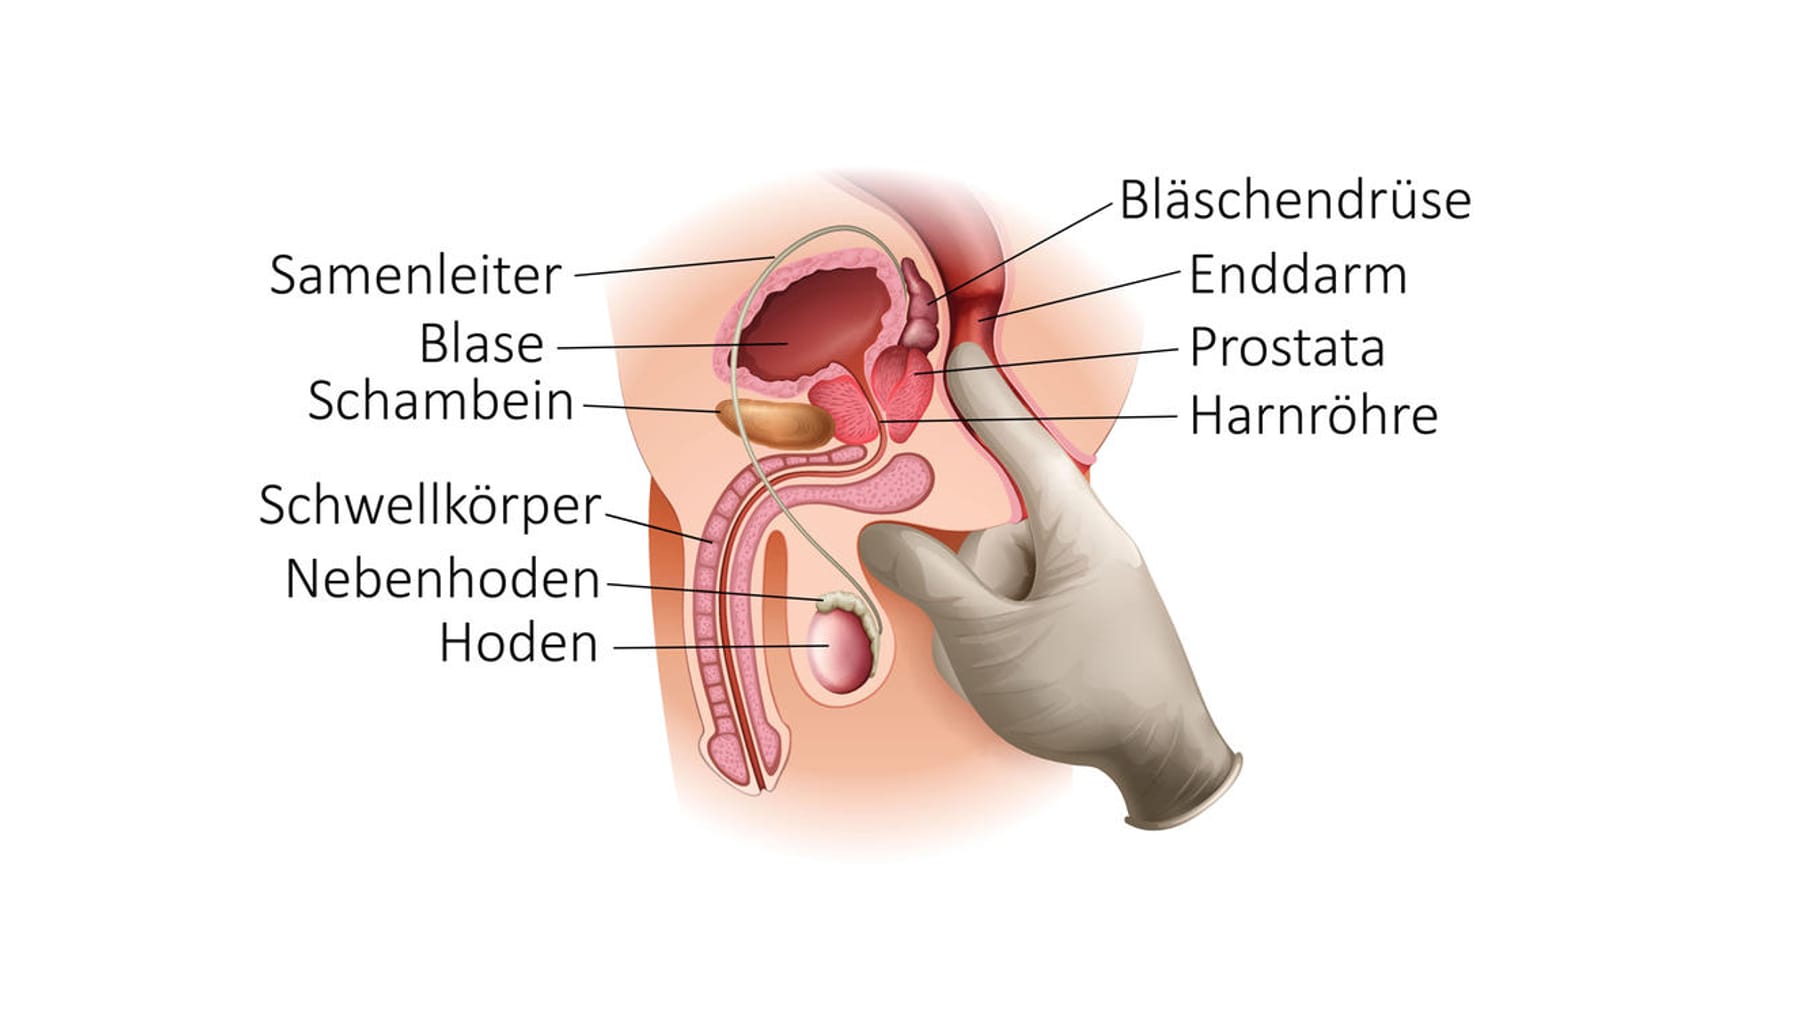 Como estimular la prostata